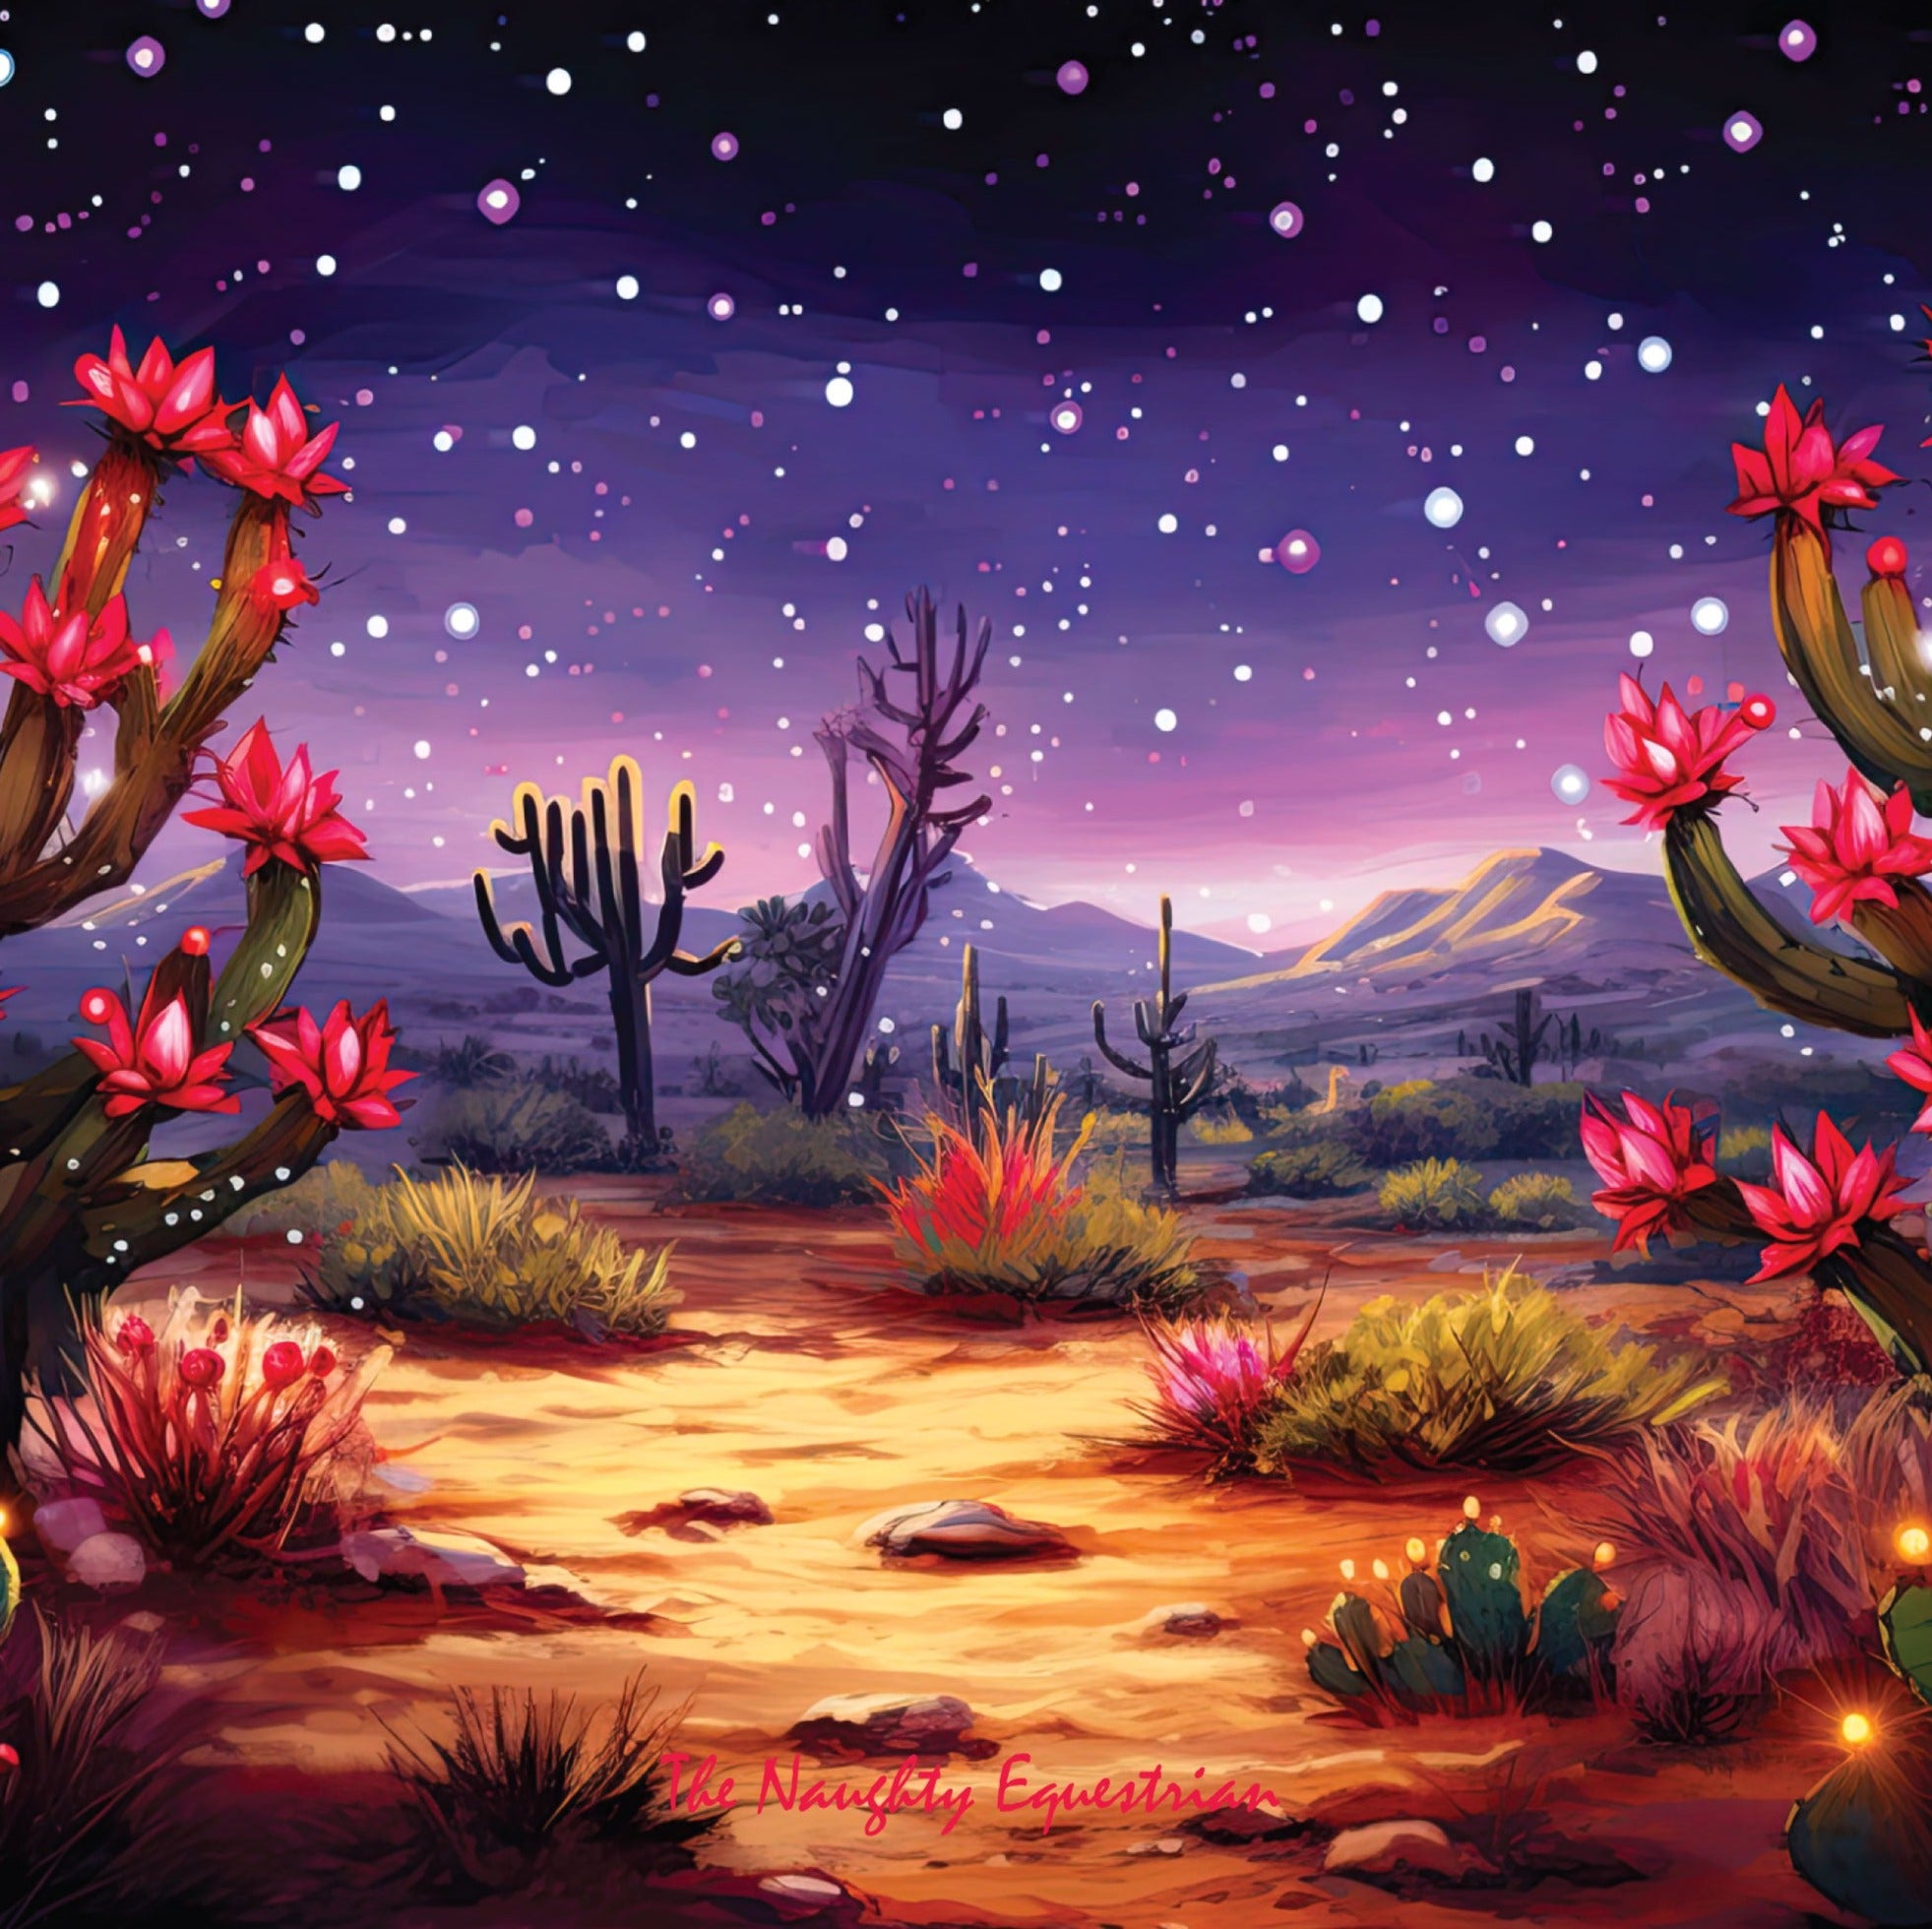 Purple Hues Oasis: Desert Cactus Twinkling Stars Coaster Set